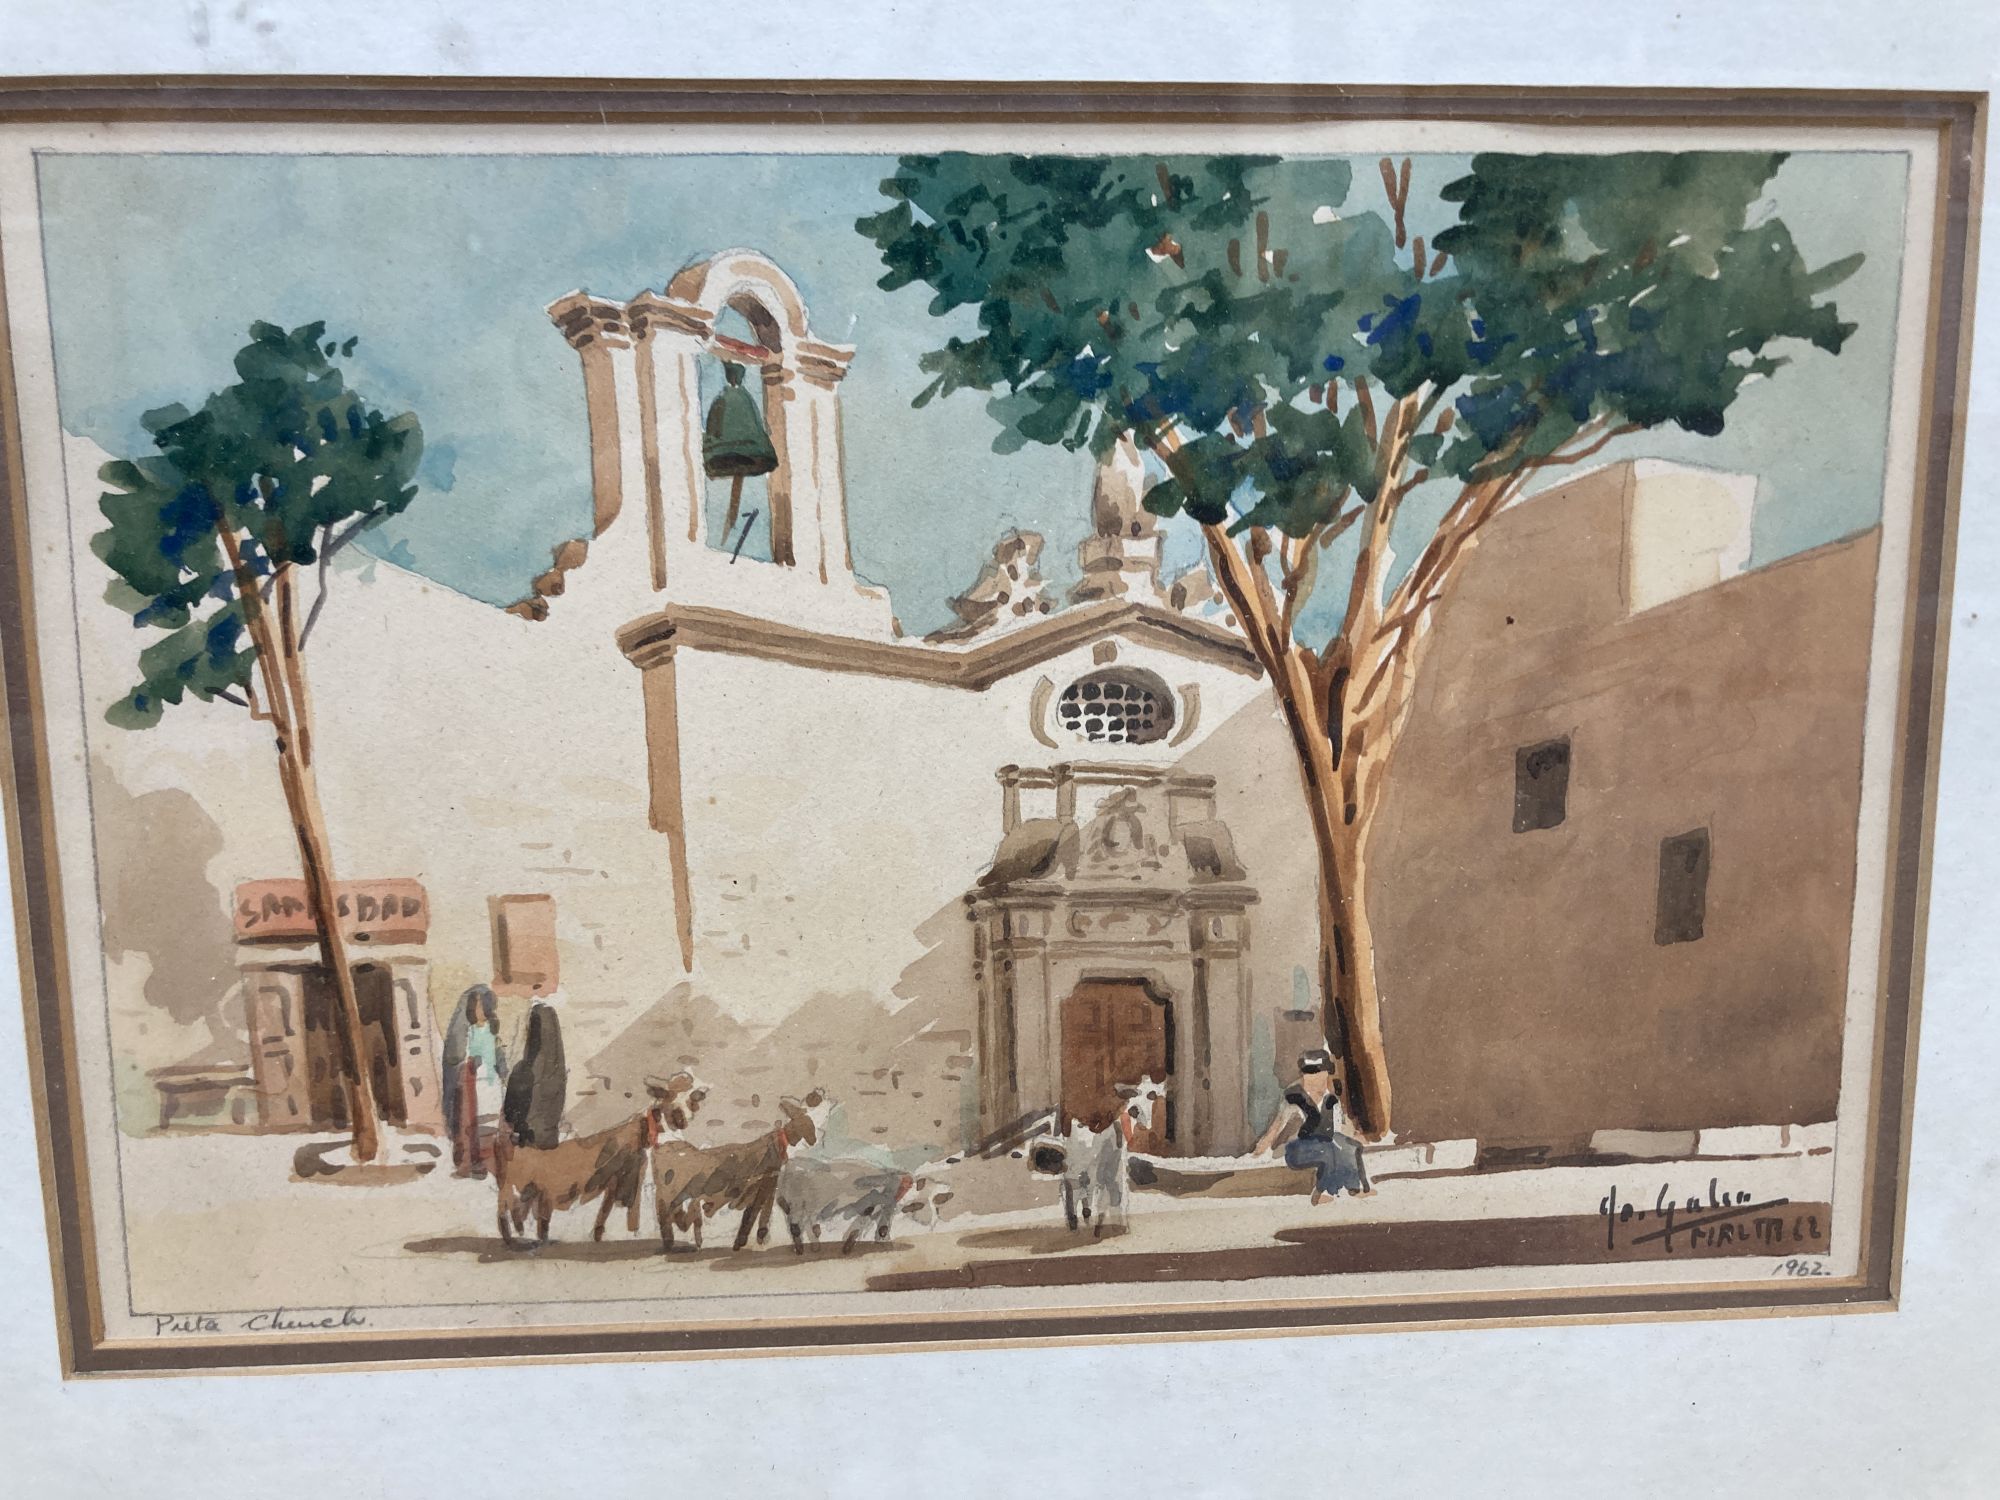 Galea, two watercolours, Pieta Church 1962, 18 x 28cm and Valetta Harbour, Malta 83, 10 x 29cm